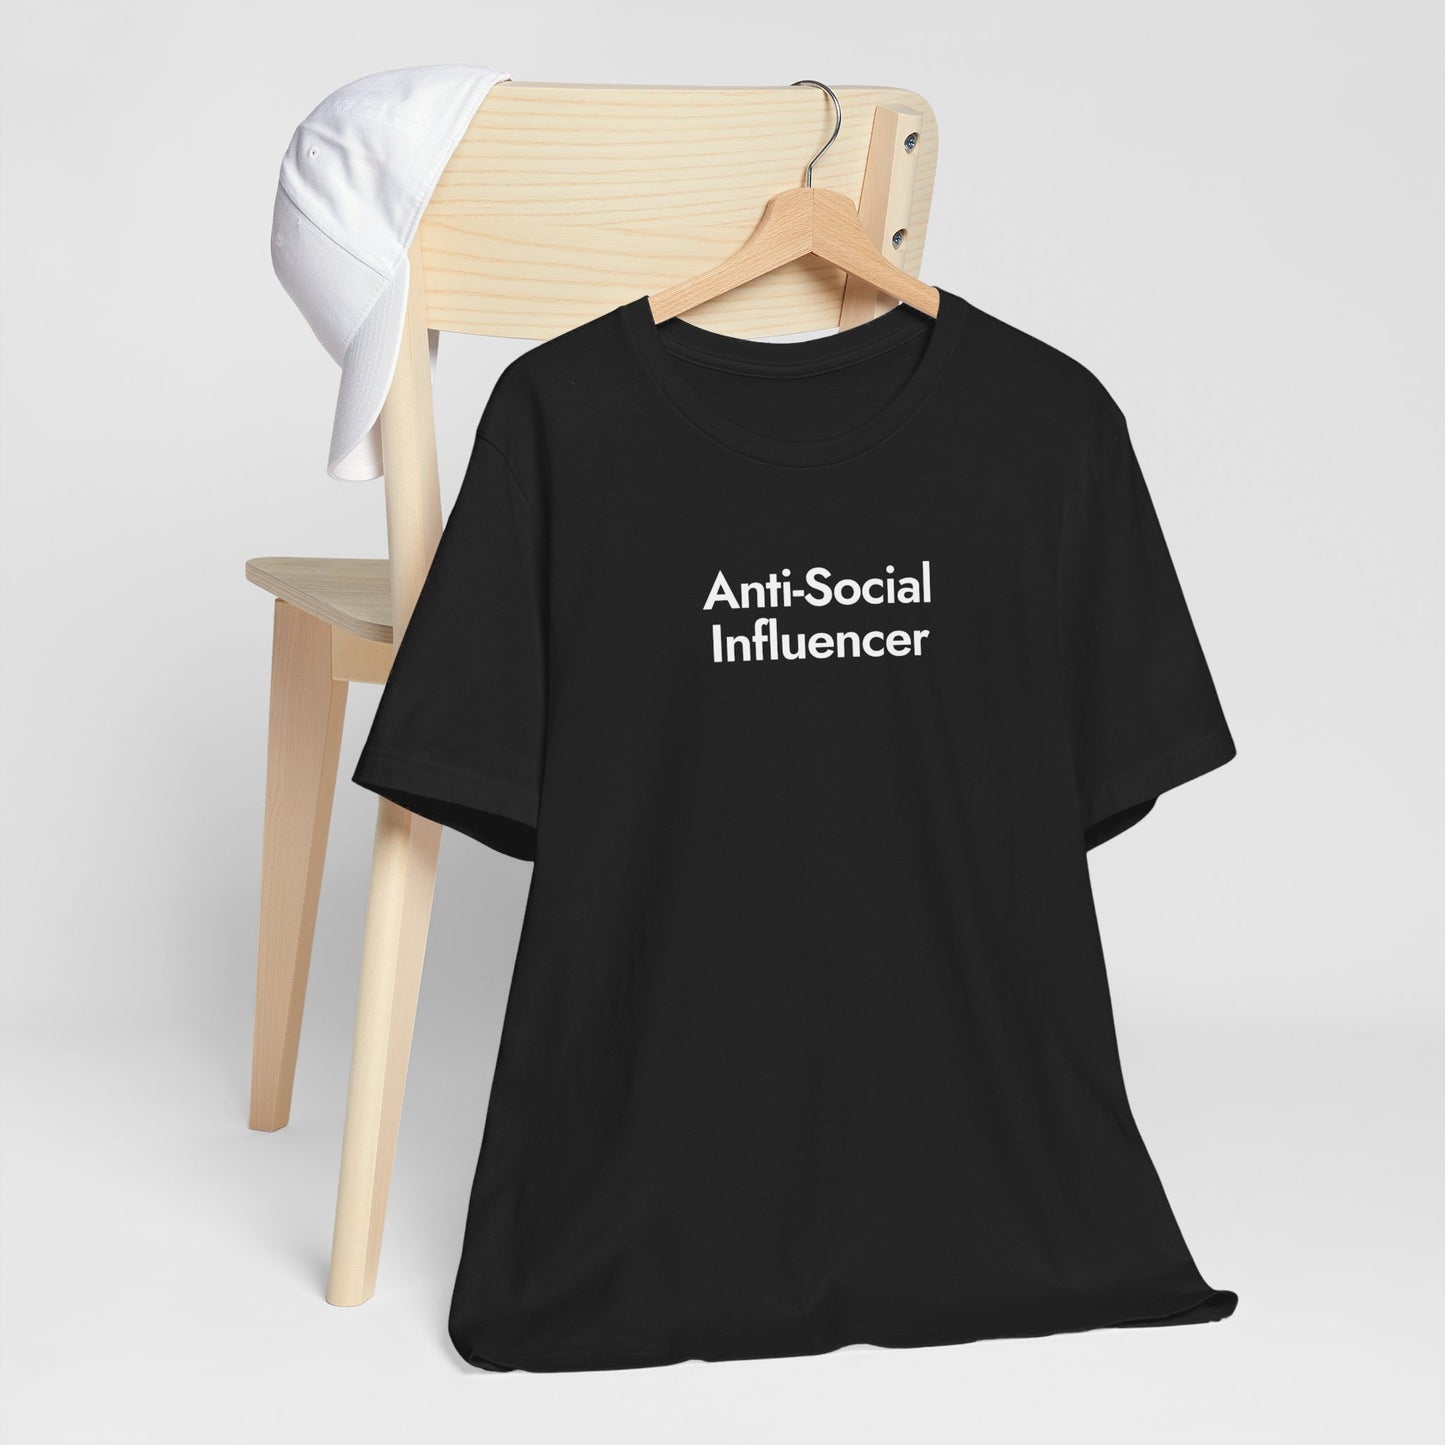 Anti-Social Influencer